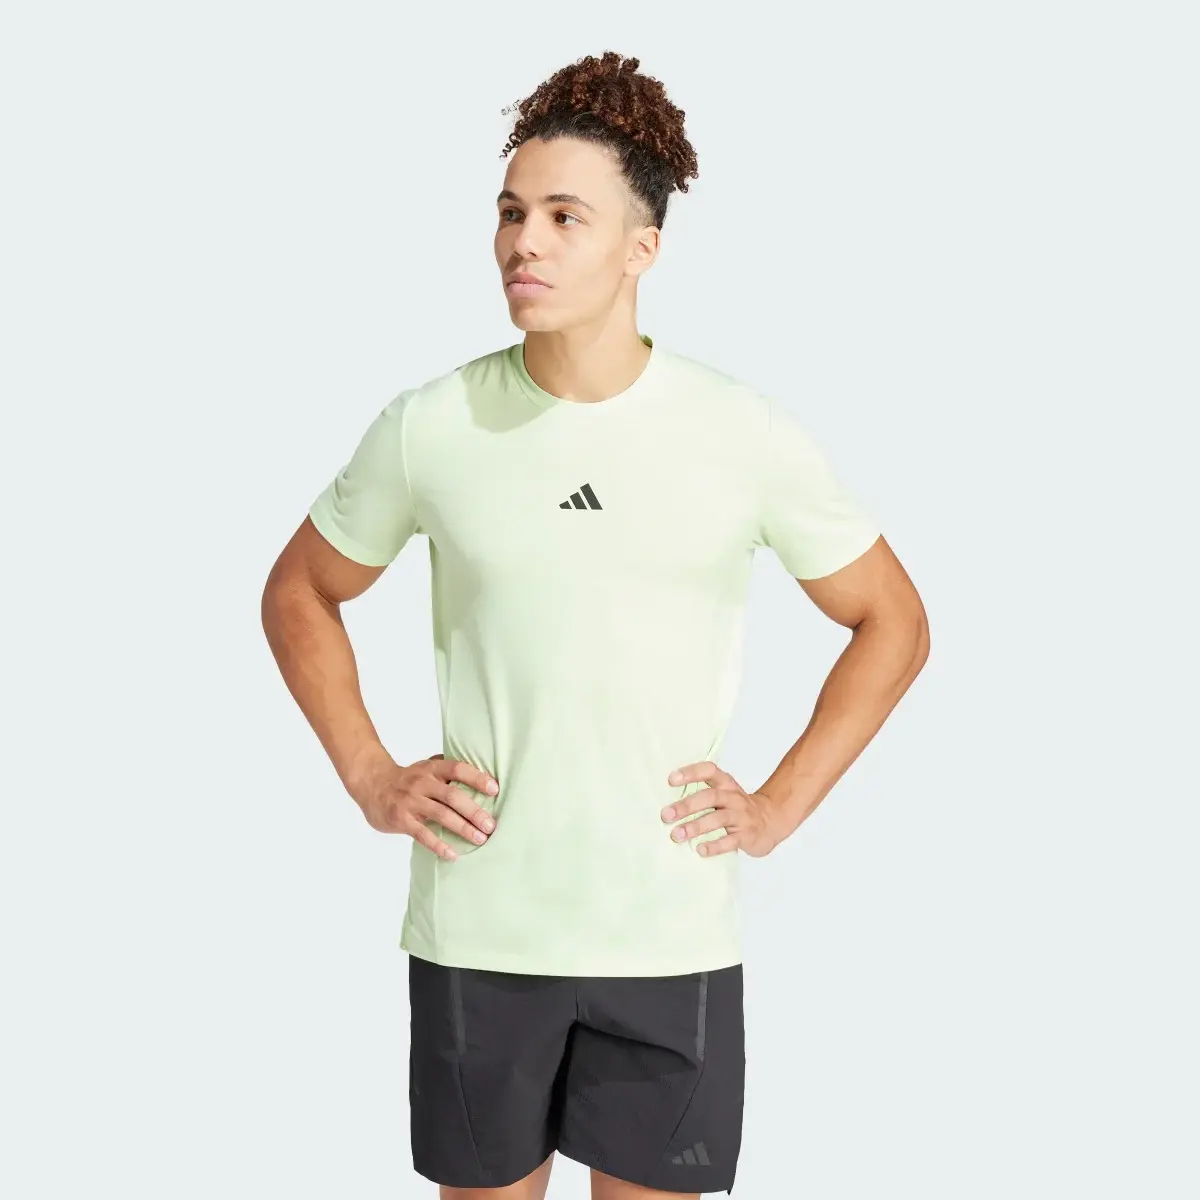 Adidas Designed for Training Workout T-Shirt. 2